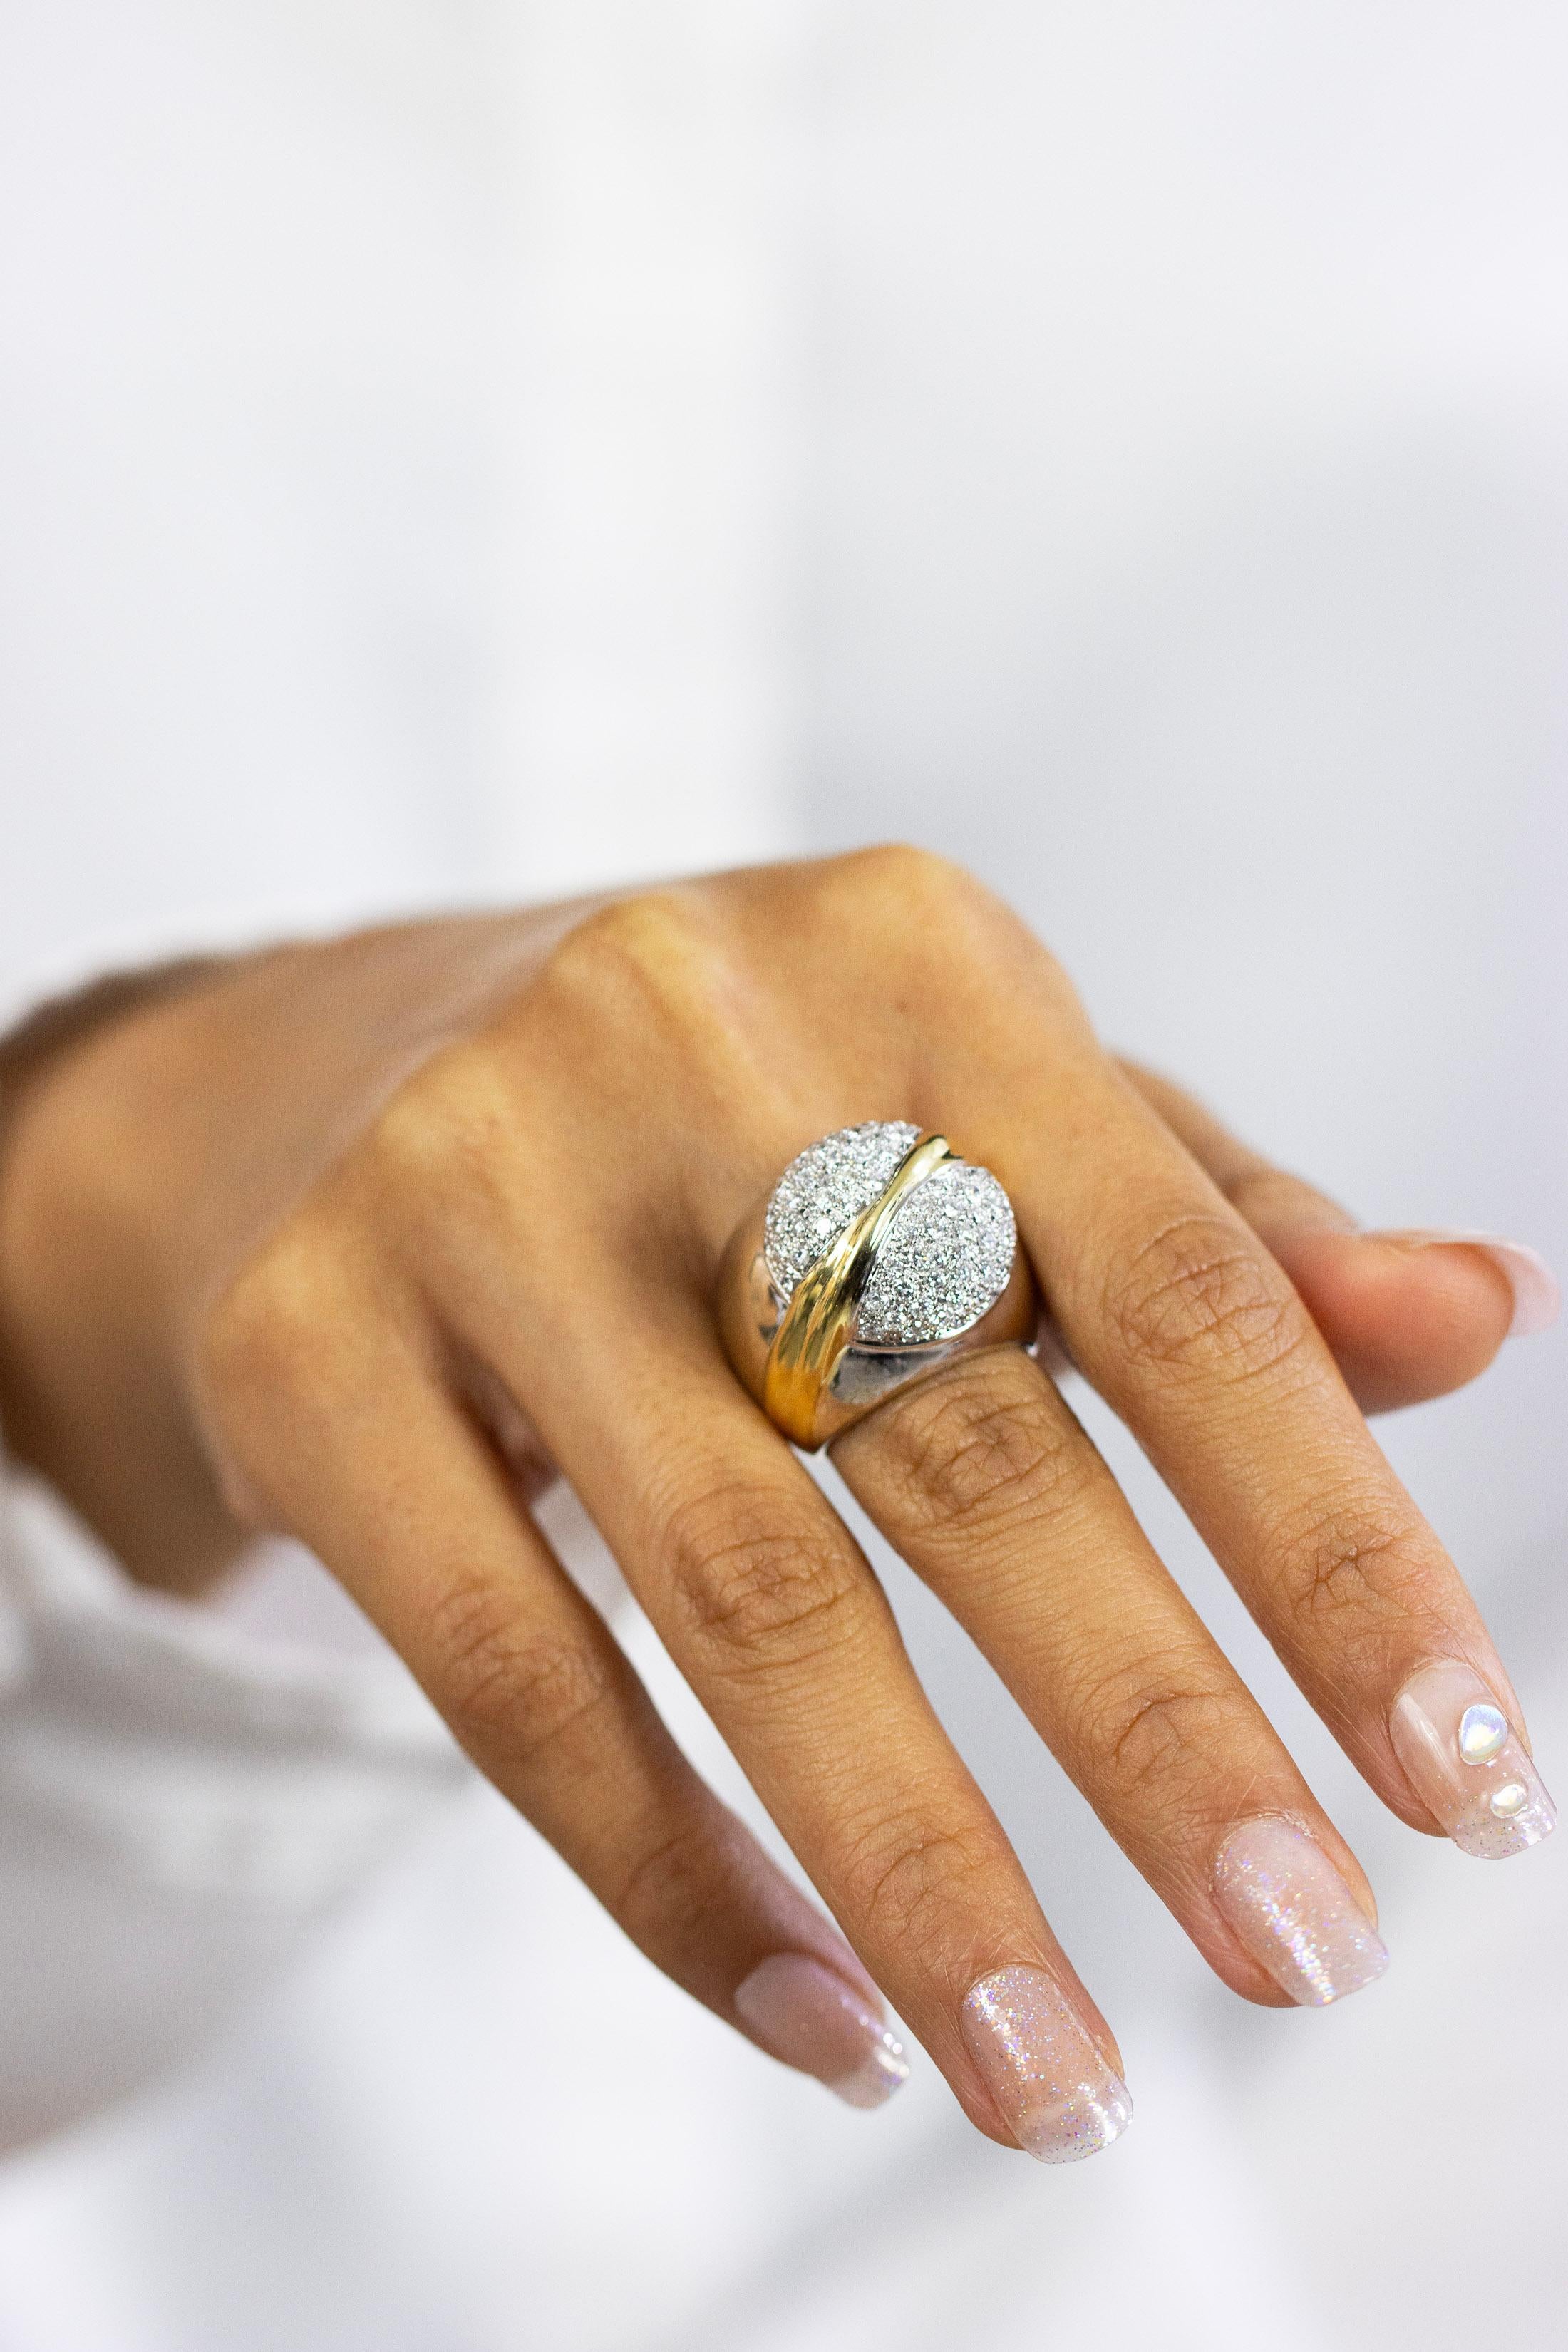 Roman Malakov 3.06 Carats Total Round Brilliant Cut Diamond Wide Fashion Ring For Sale 2